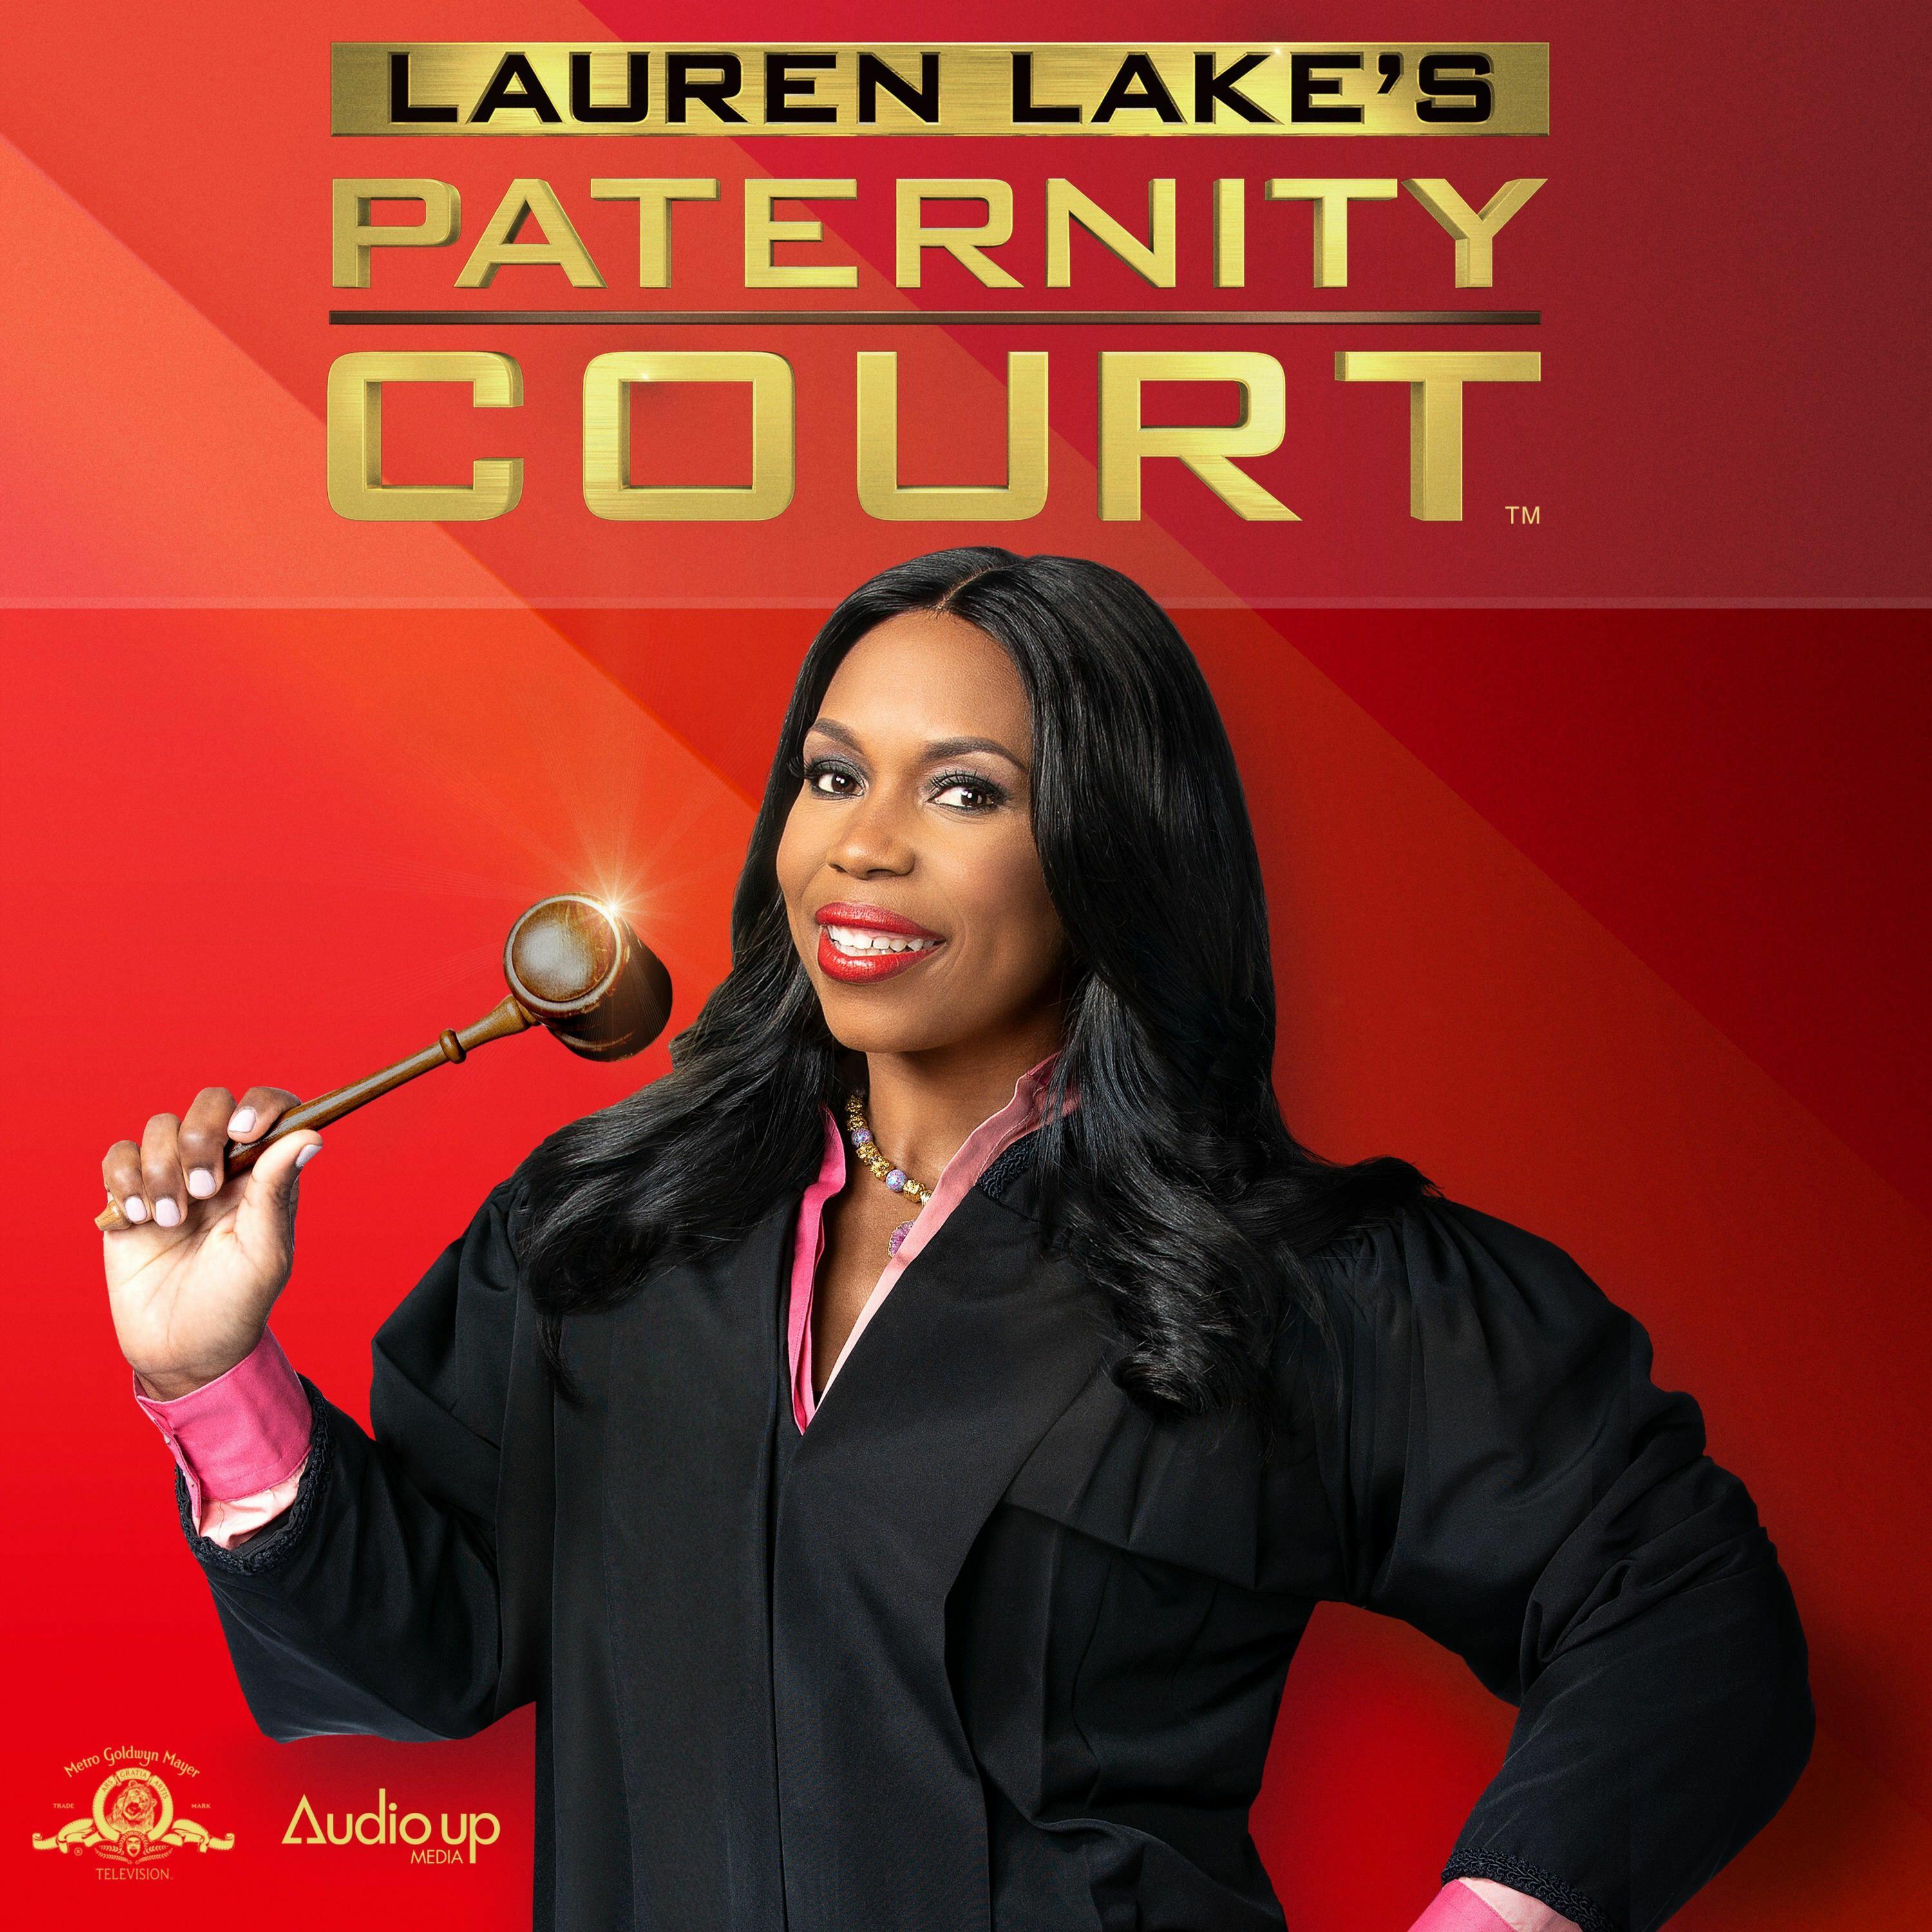 Lauren lake's paternity court recap